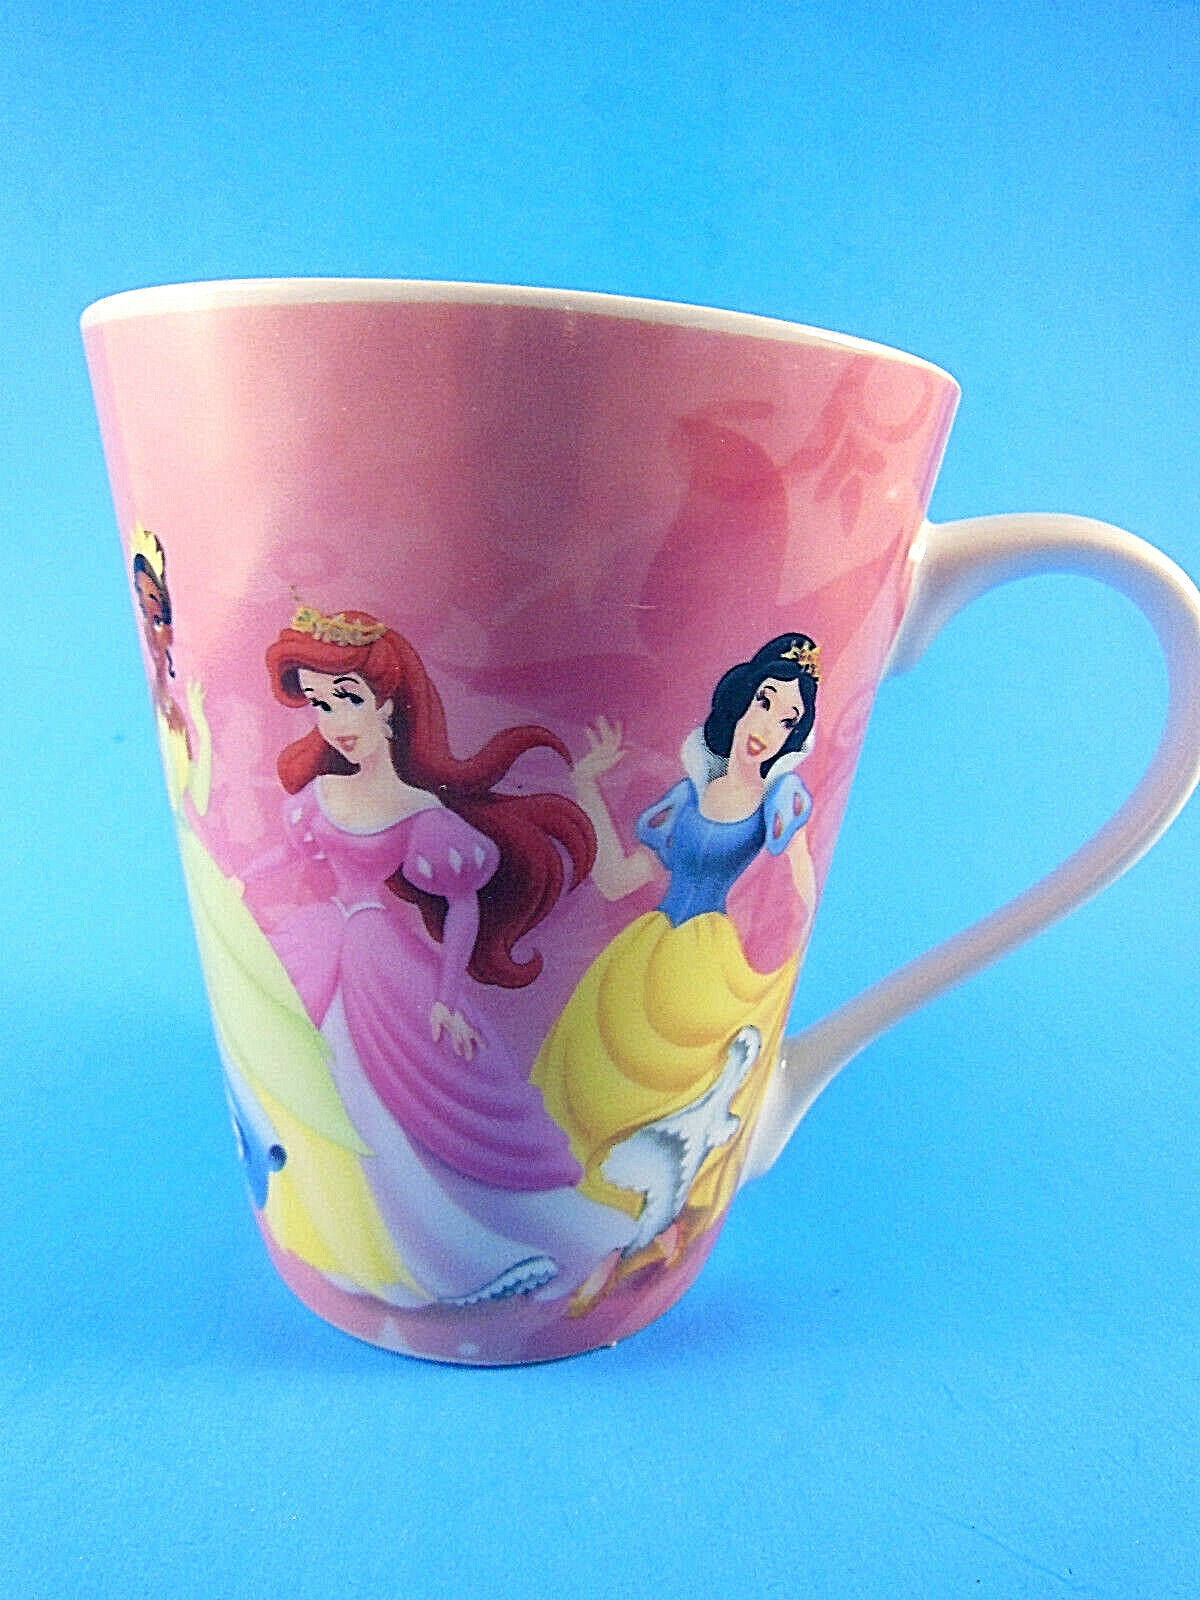 Primary image for Disney Princess Cup Mug with 7 Disney Princesses dancing Aurora Snow white Ariel